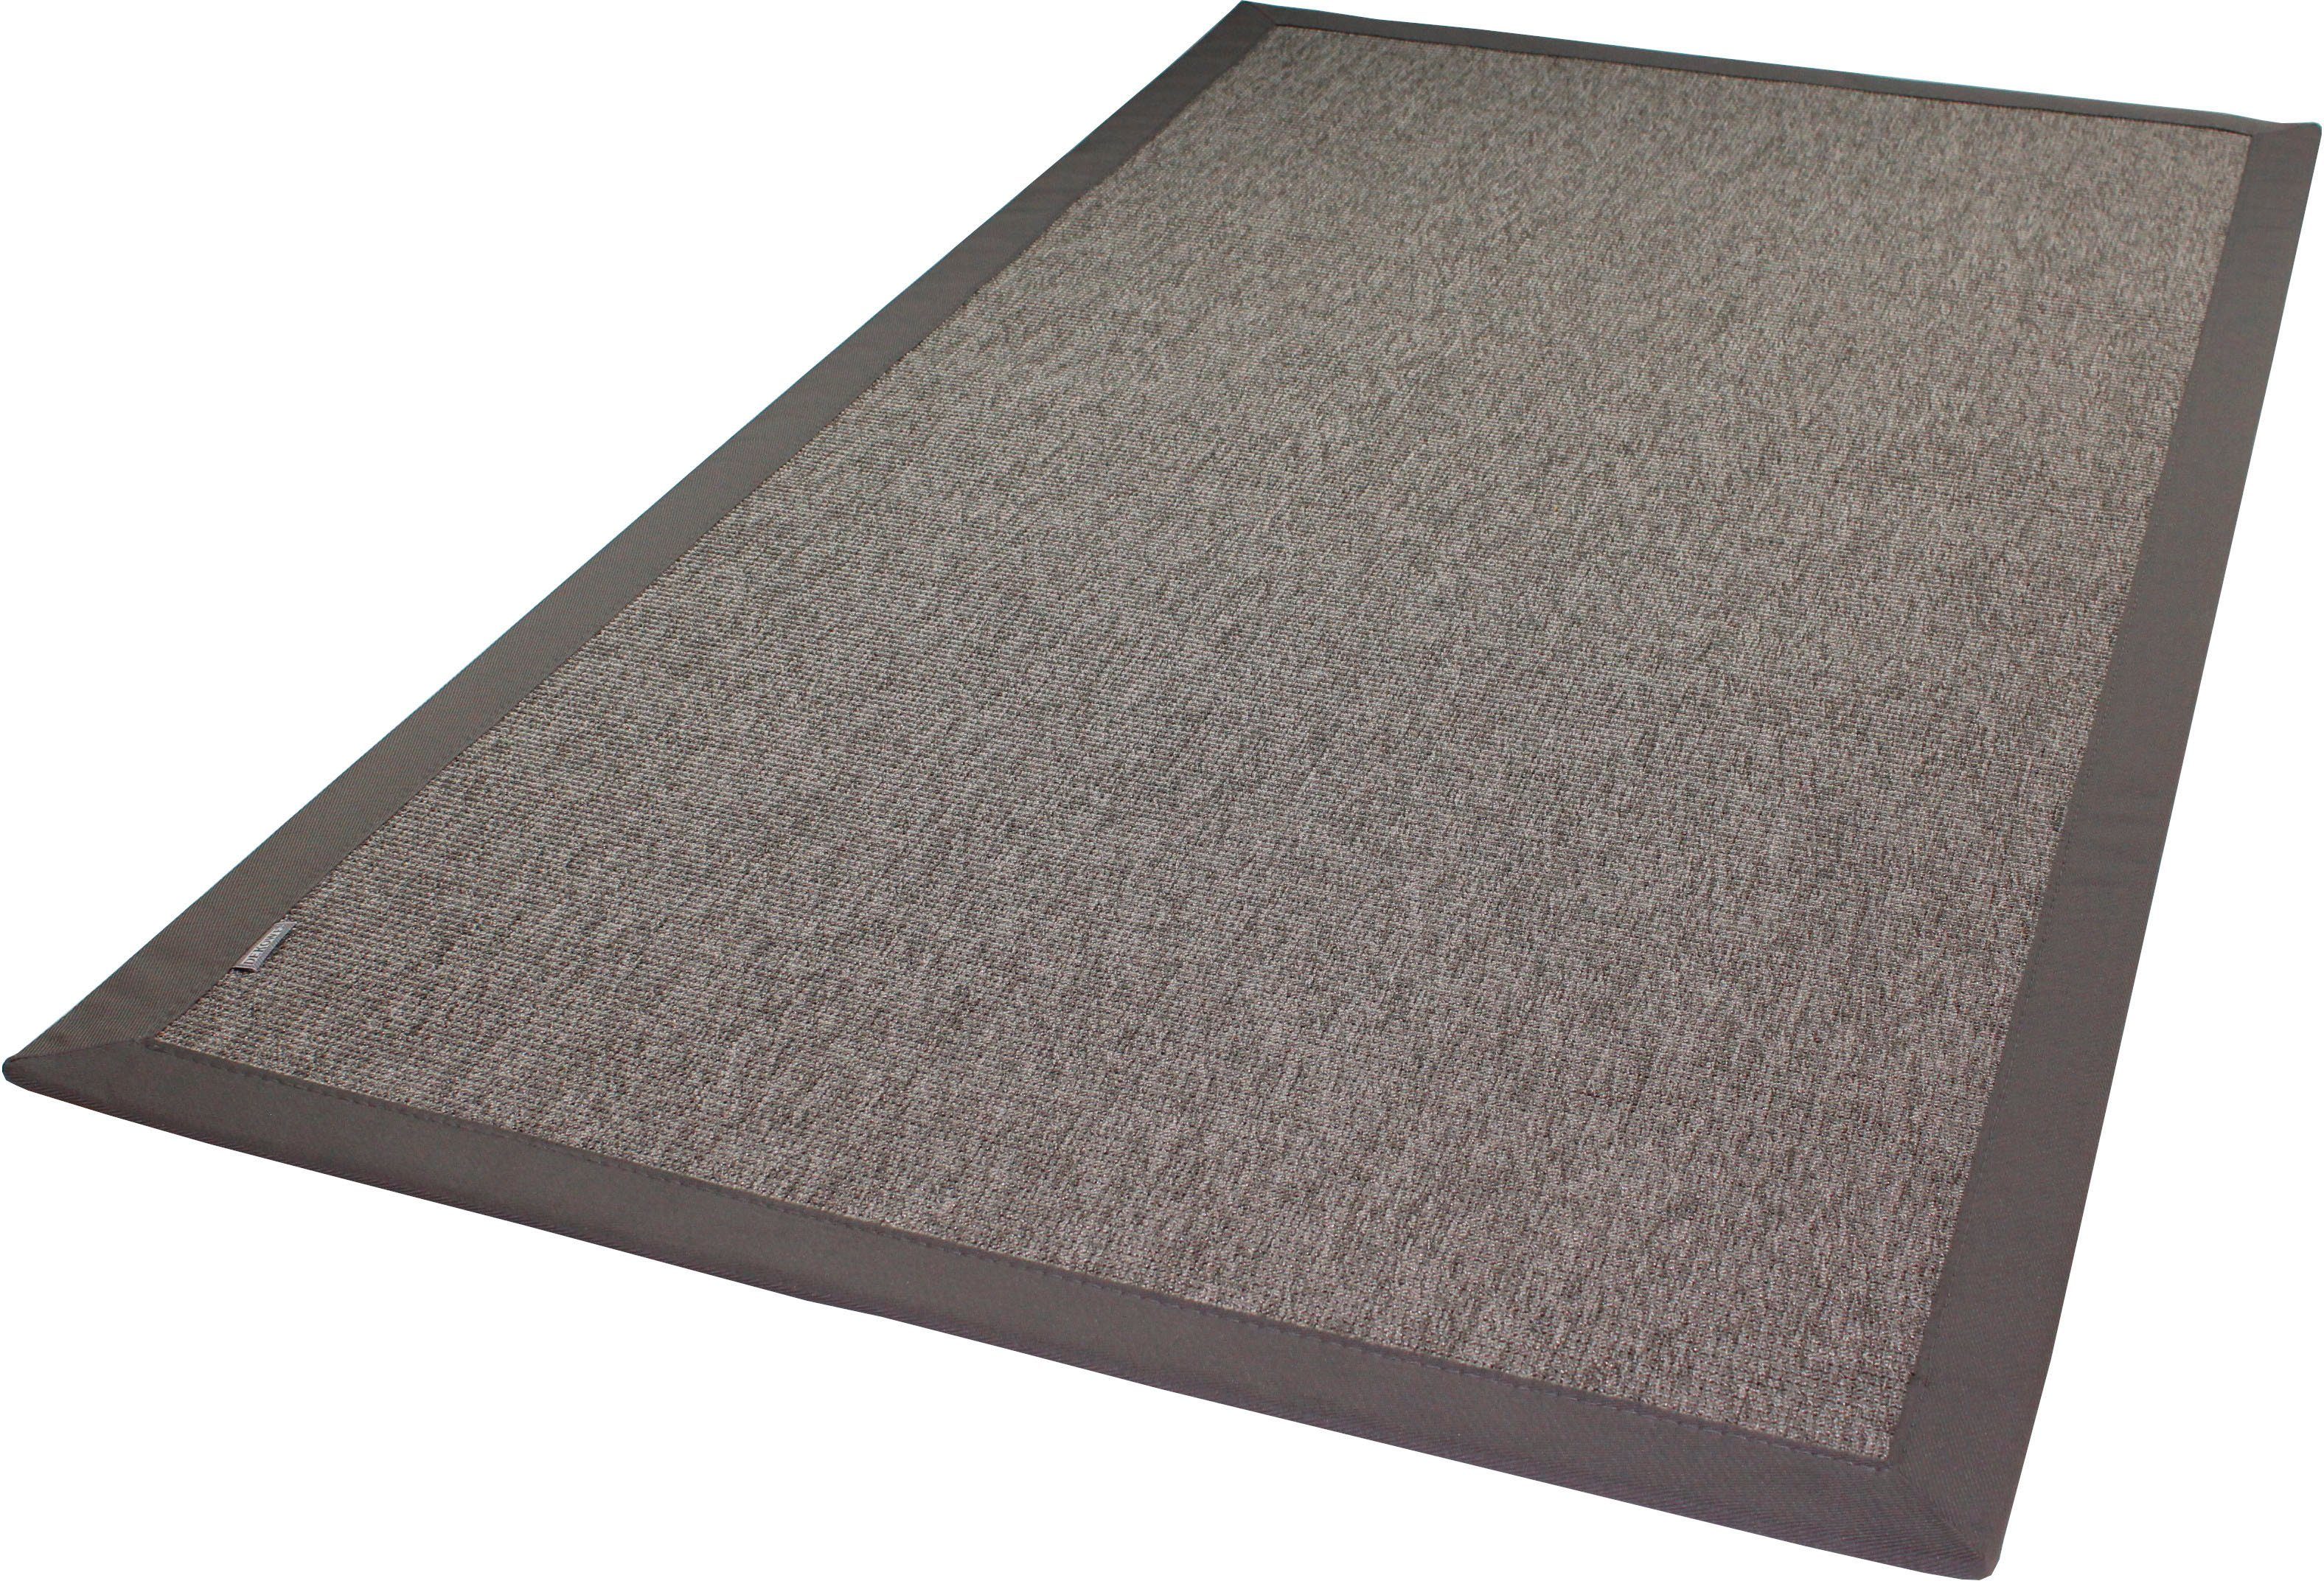 Teppichboden Naturino RipsS2 Spezial, Dekowe, rechteckig, Höhe: 8 mm, Flachgewebe, meliert, Sisal-Optik, In- und Outdoor geeignet platin